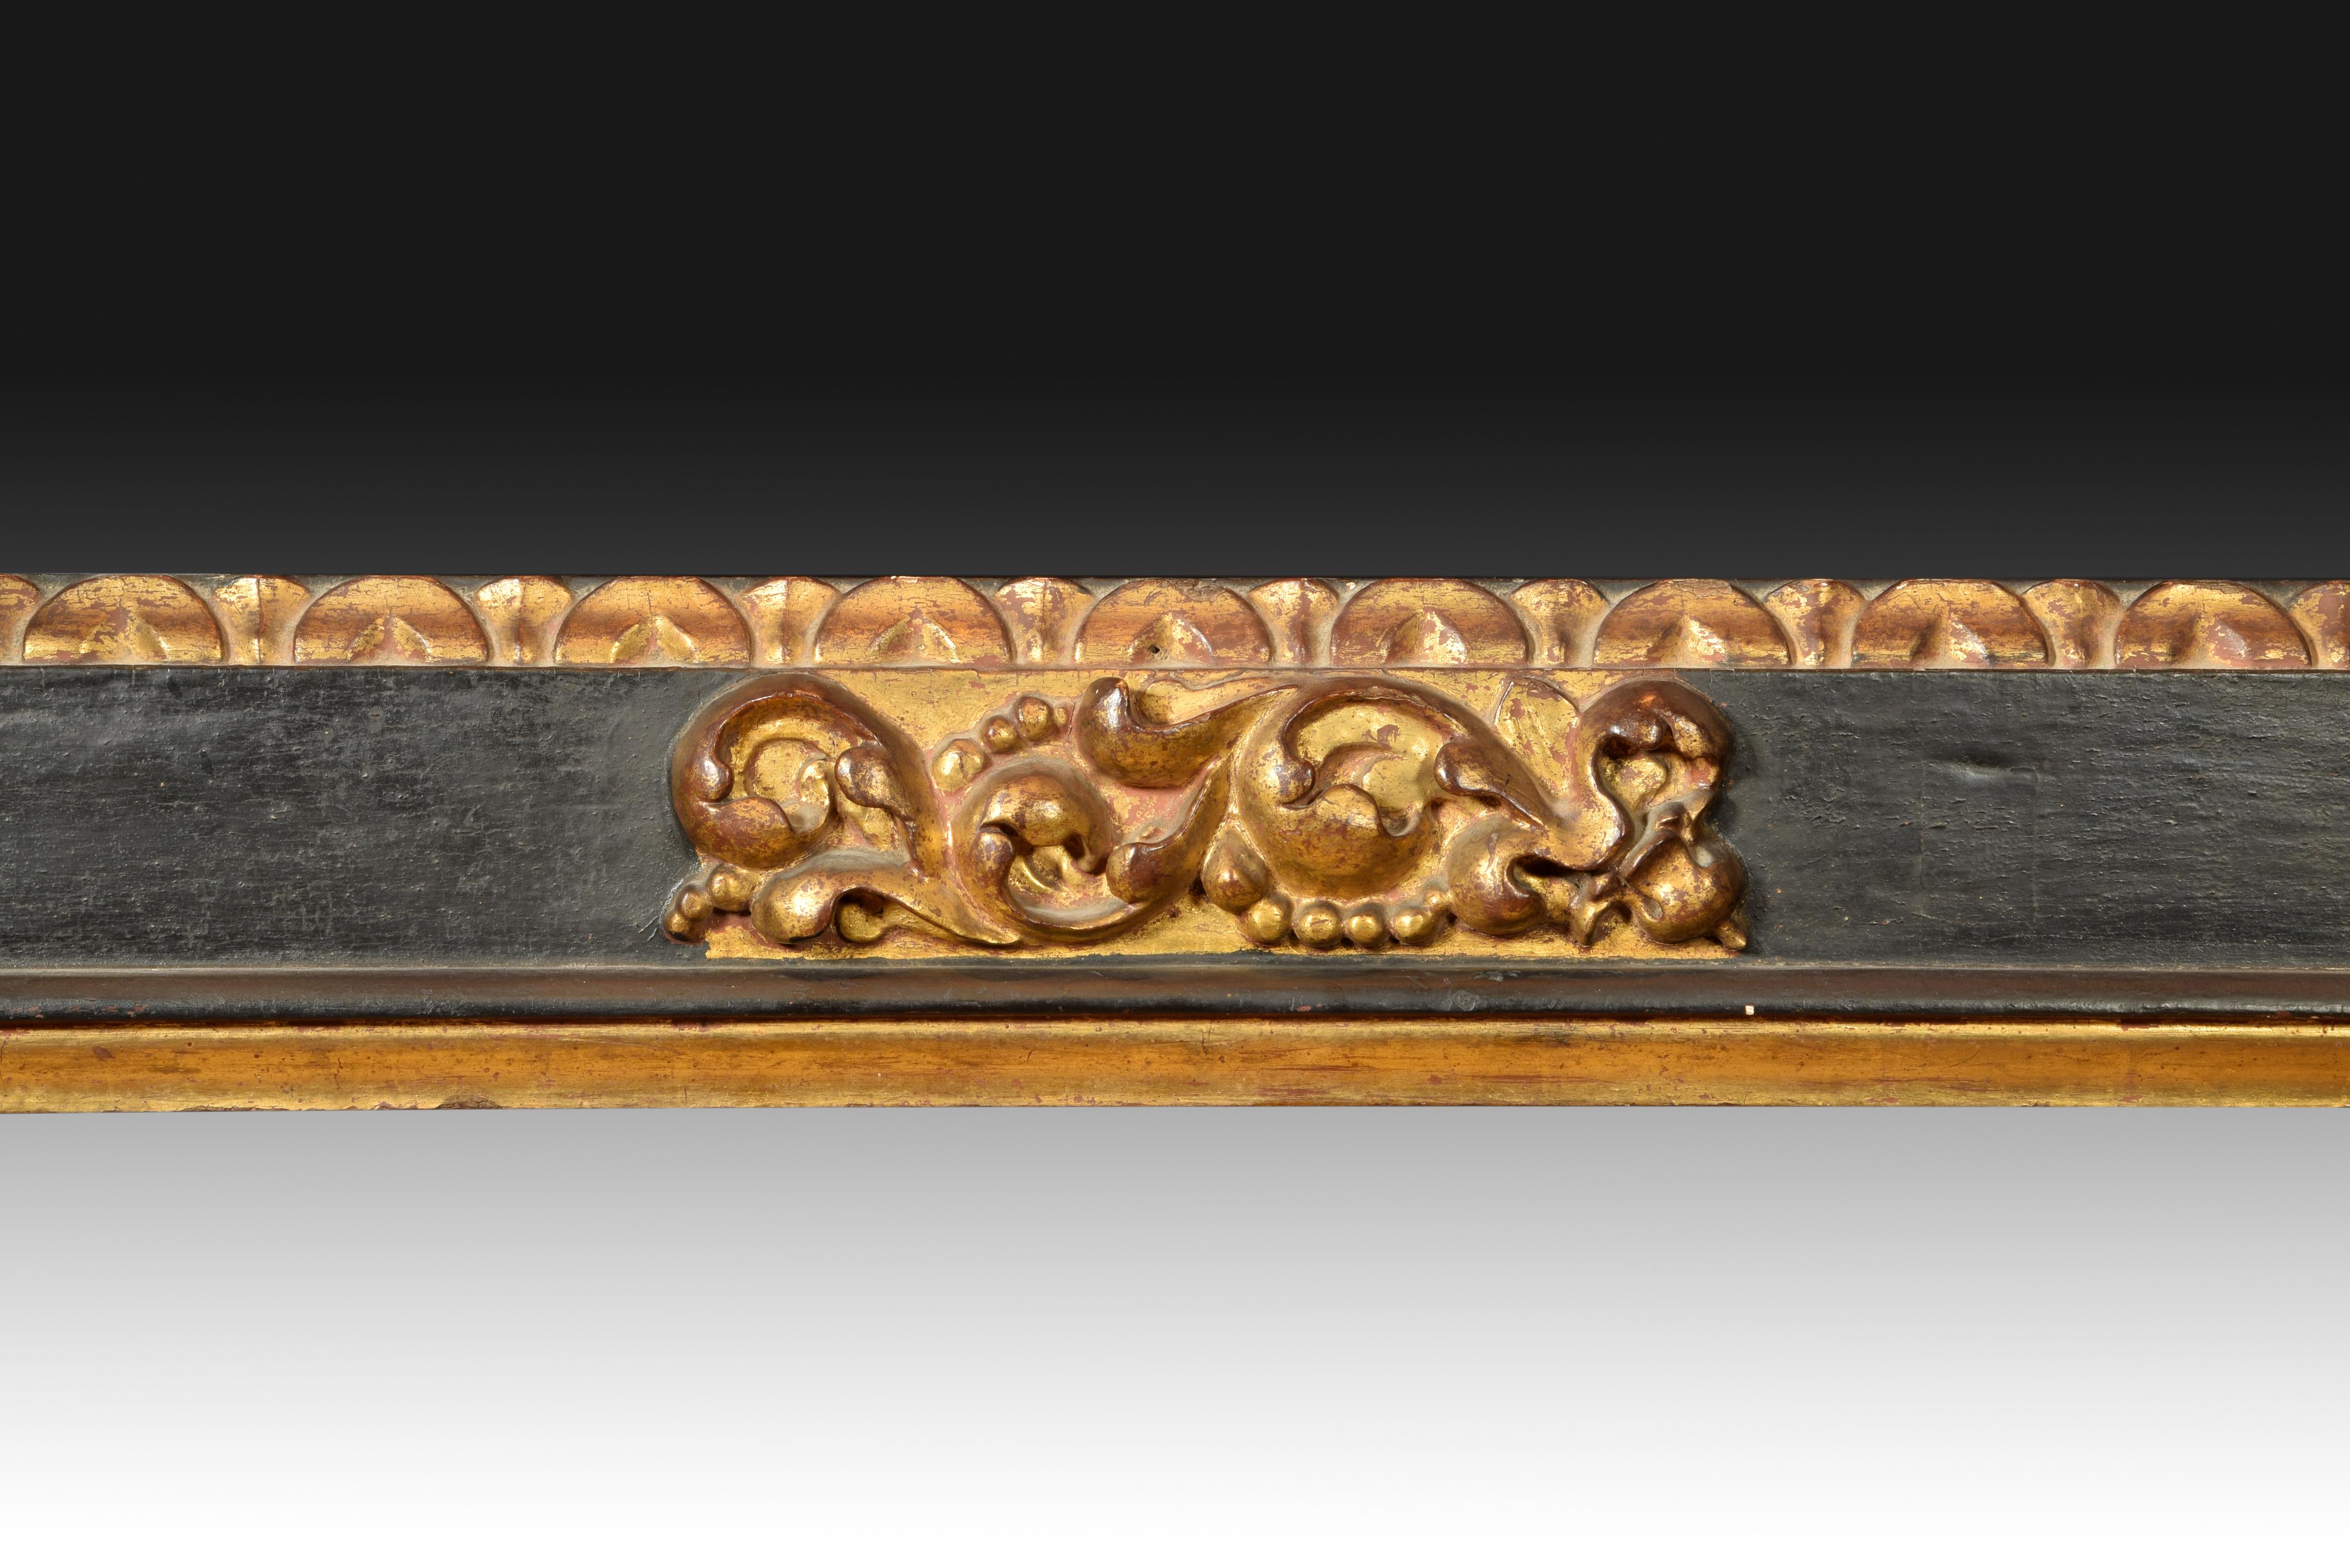 European Frame. Polychromed Wood. Baroque, 17th Century